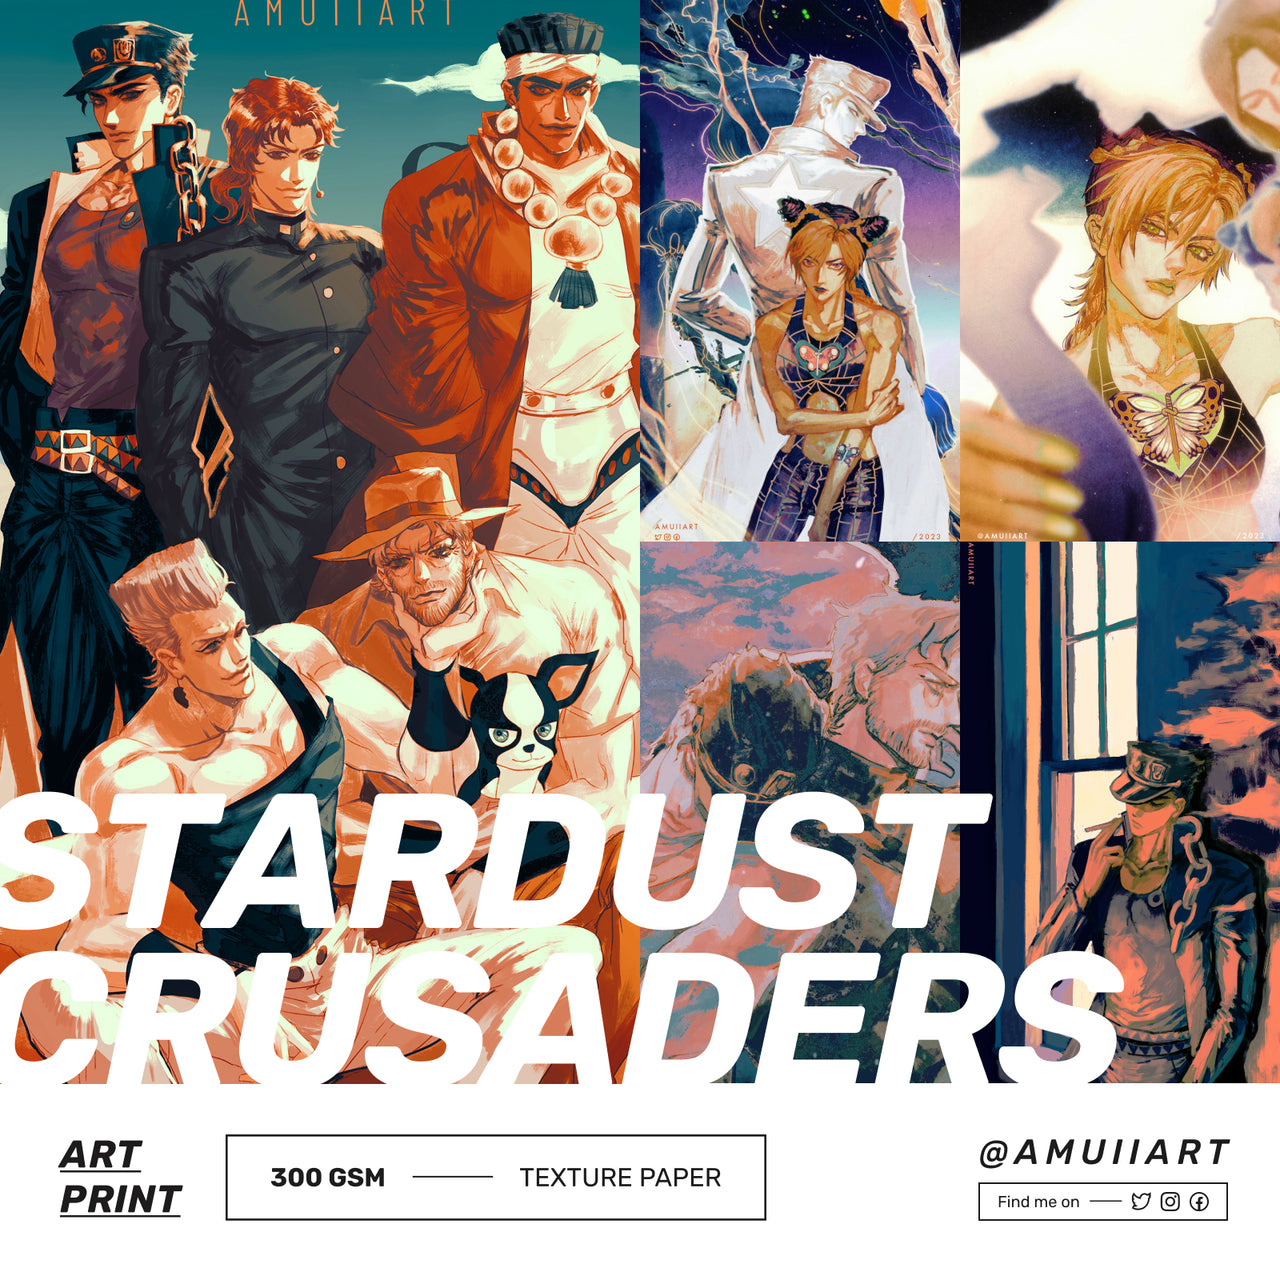 Part 3. Stardust Crusaders / JJBA Art print